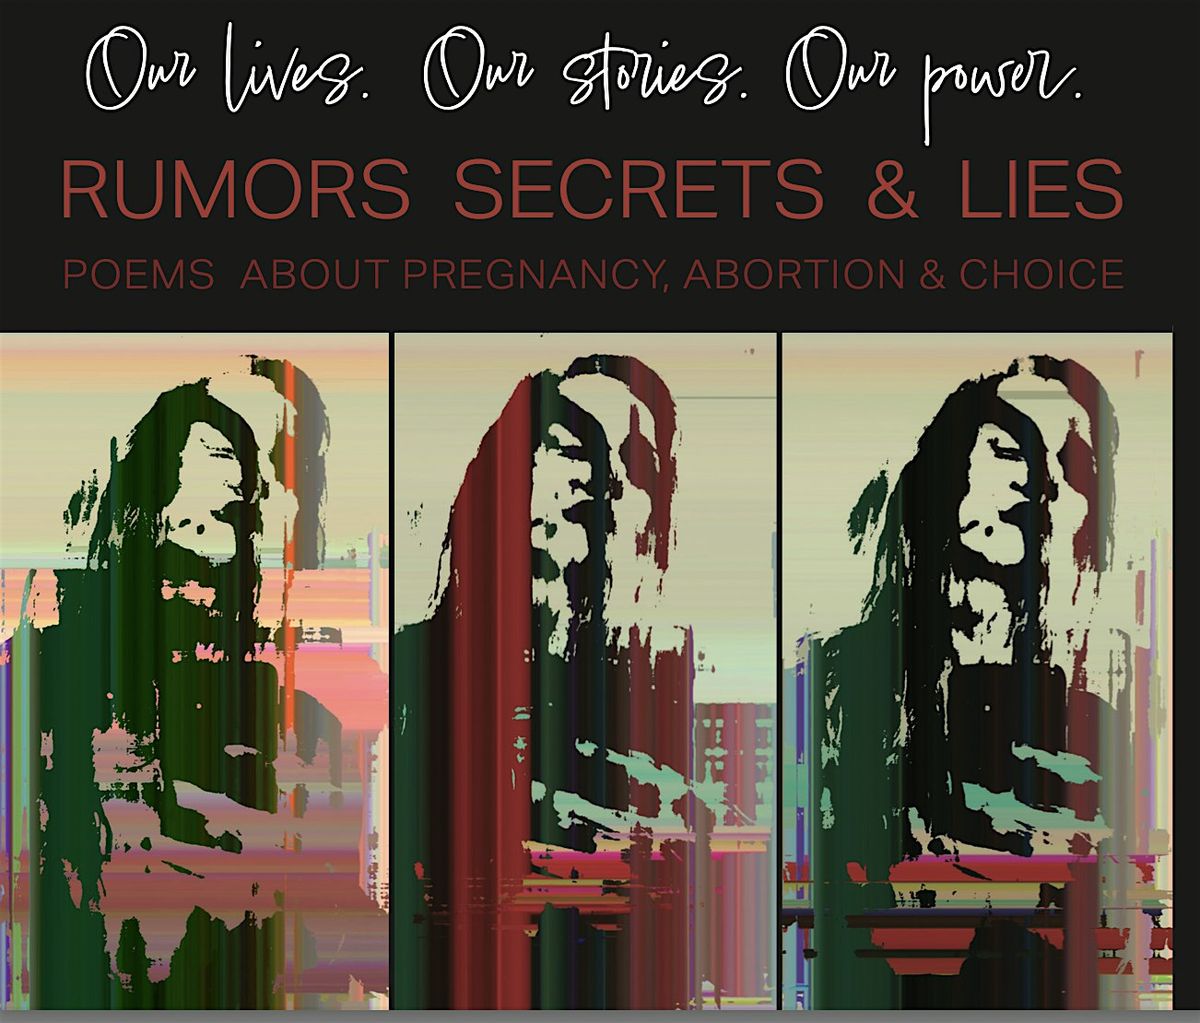 Rumors, Secrets & Lies:  An Event About Pregnancy, Abortion & Choice